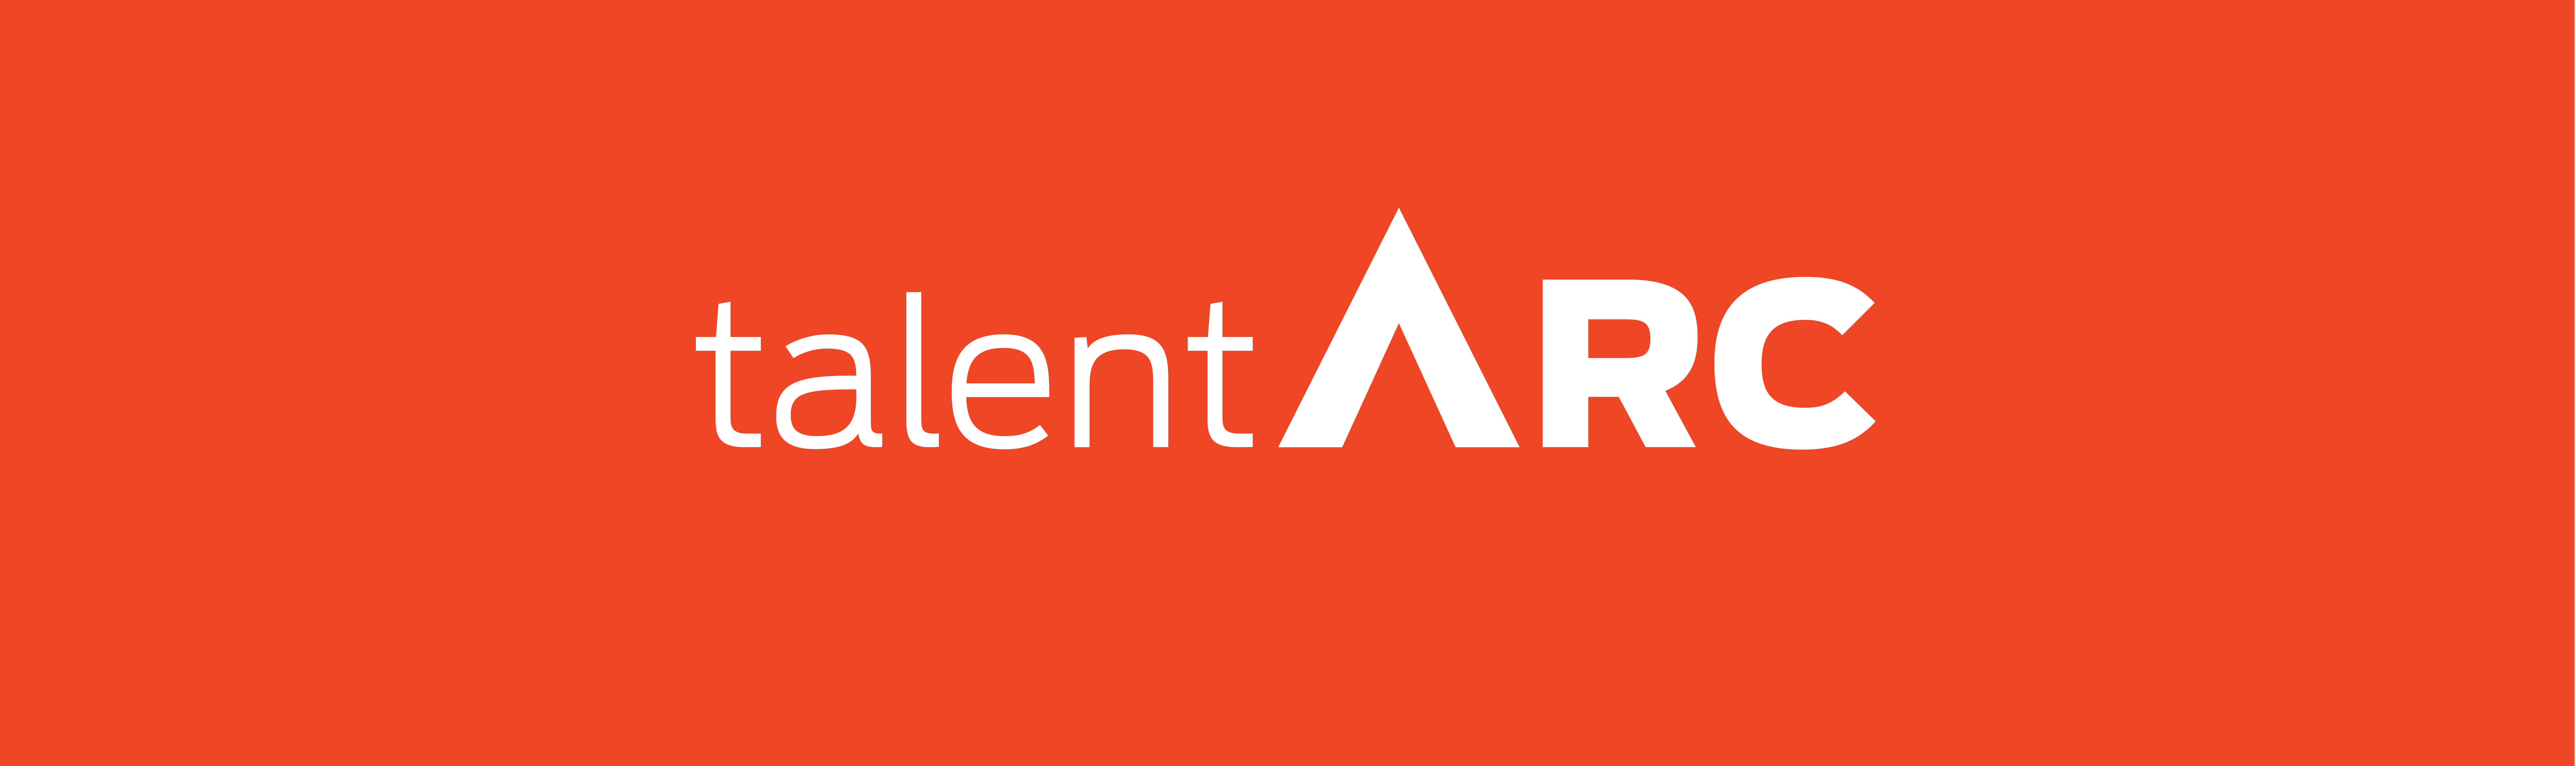 talentArc logo